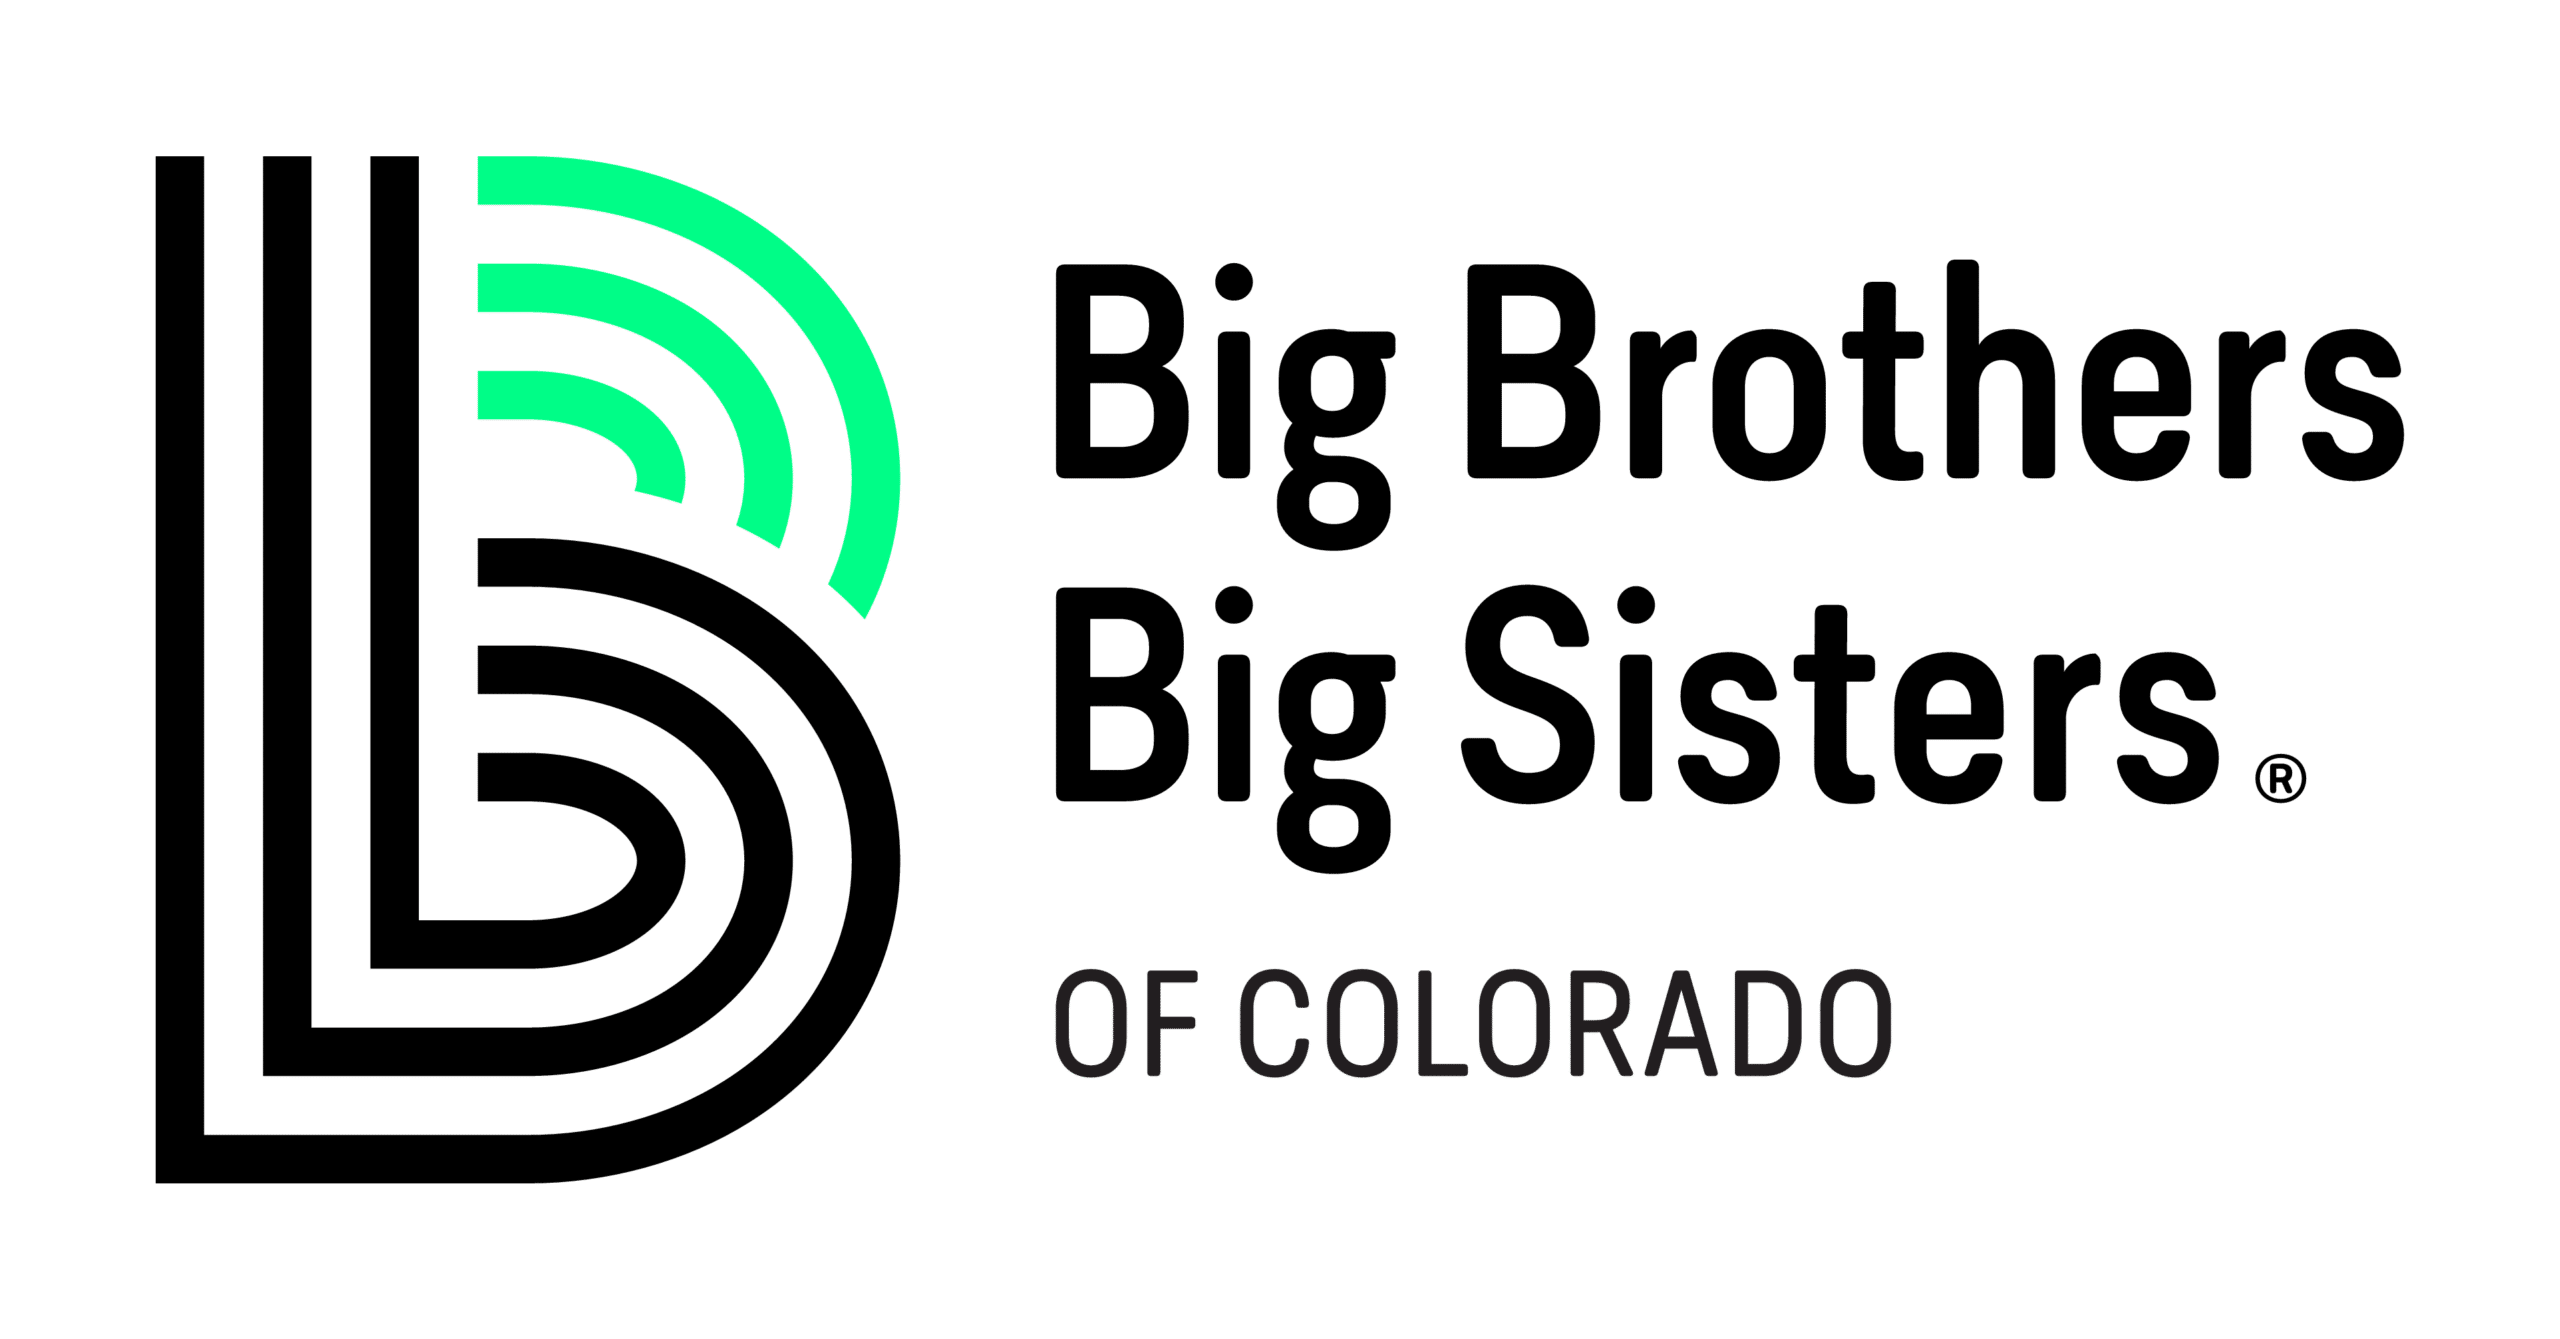 Image of logo of Big Brothers Big Sisters Colorado